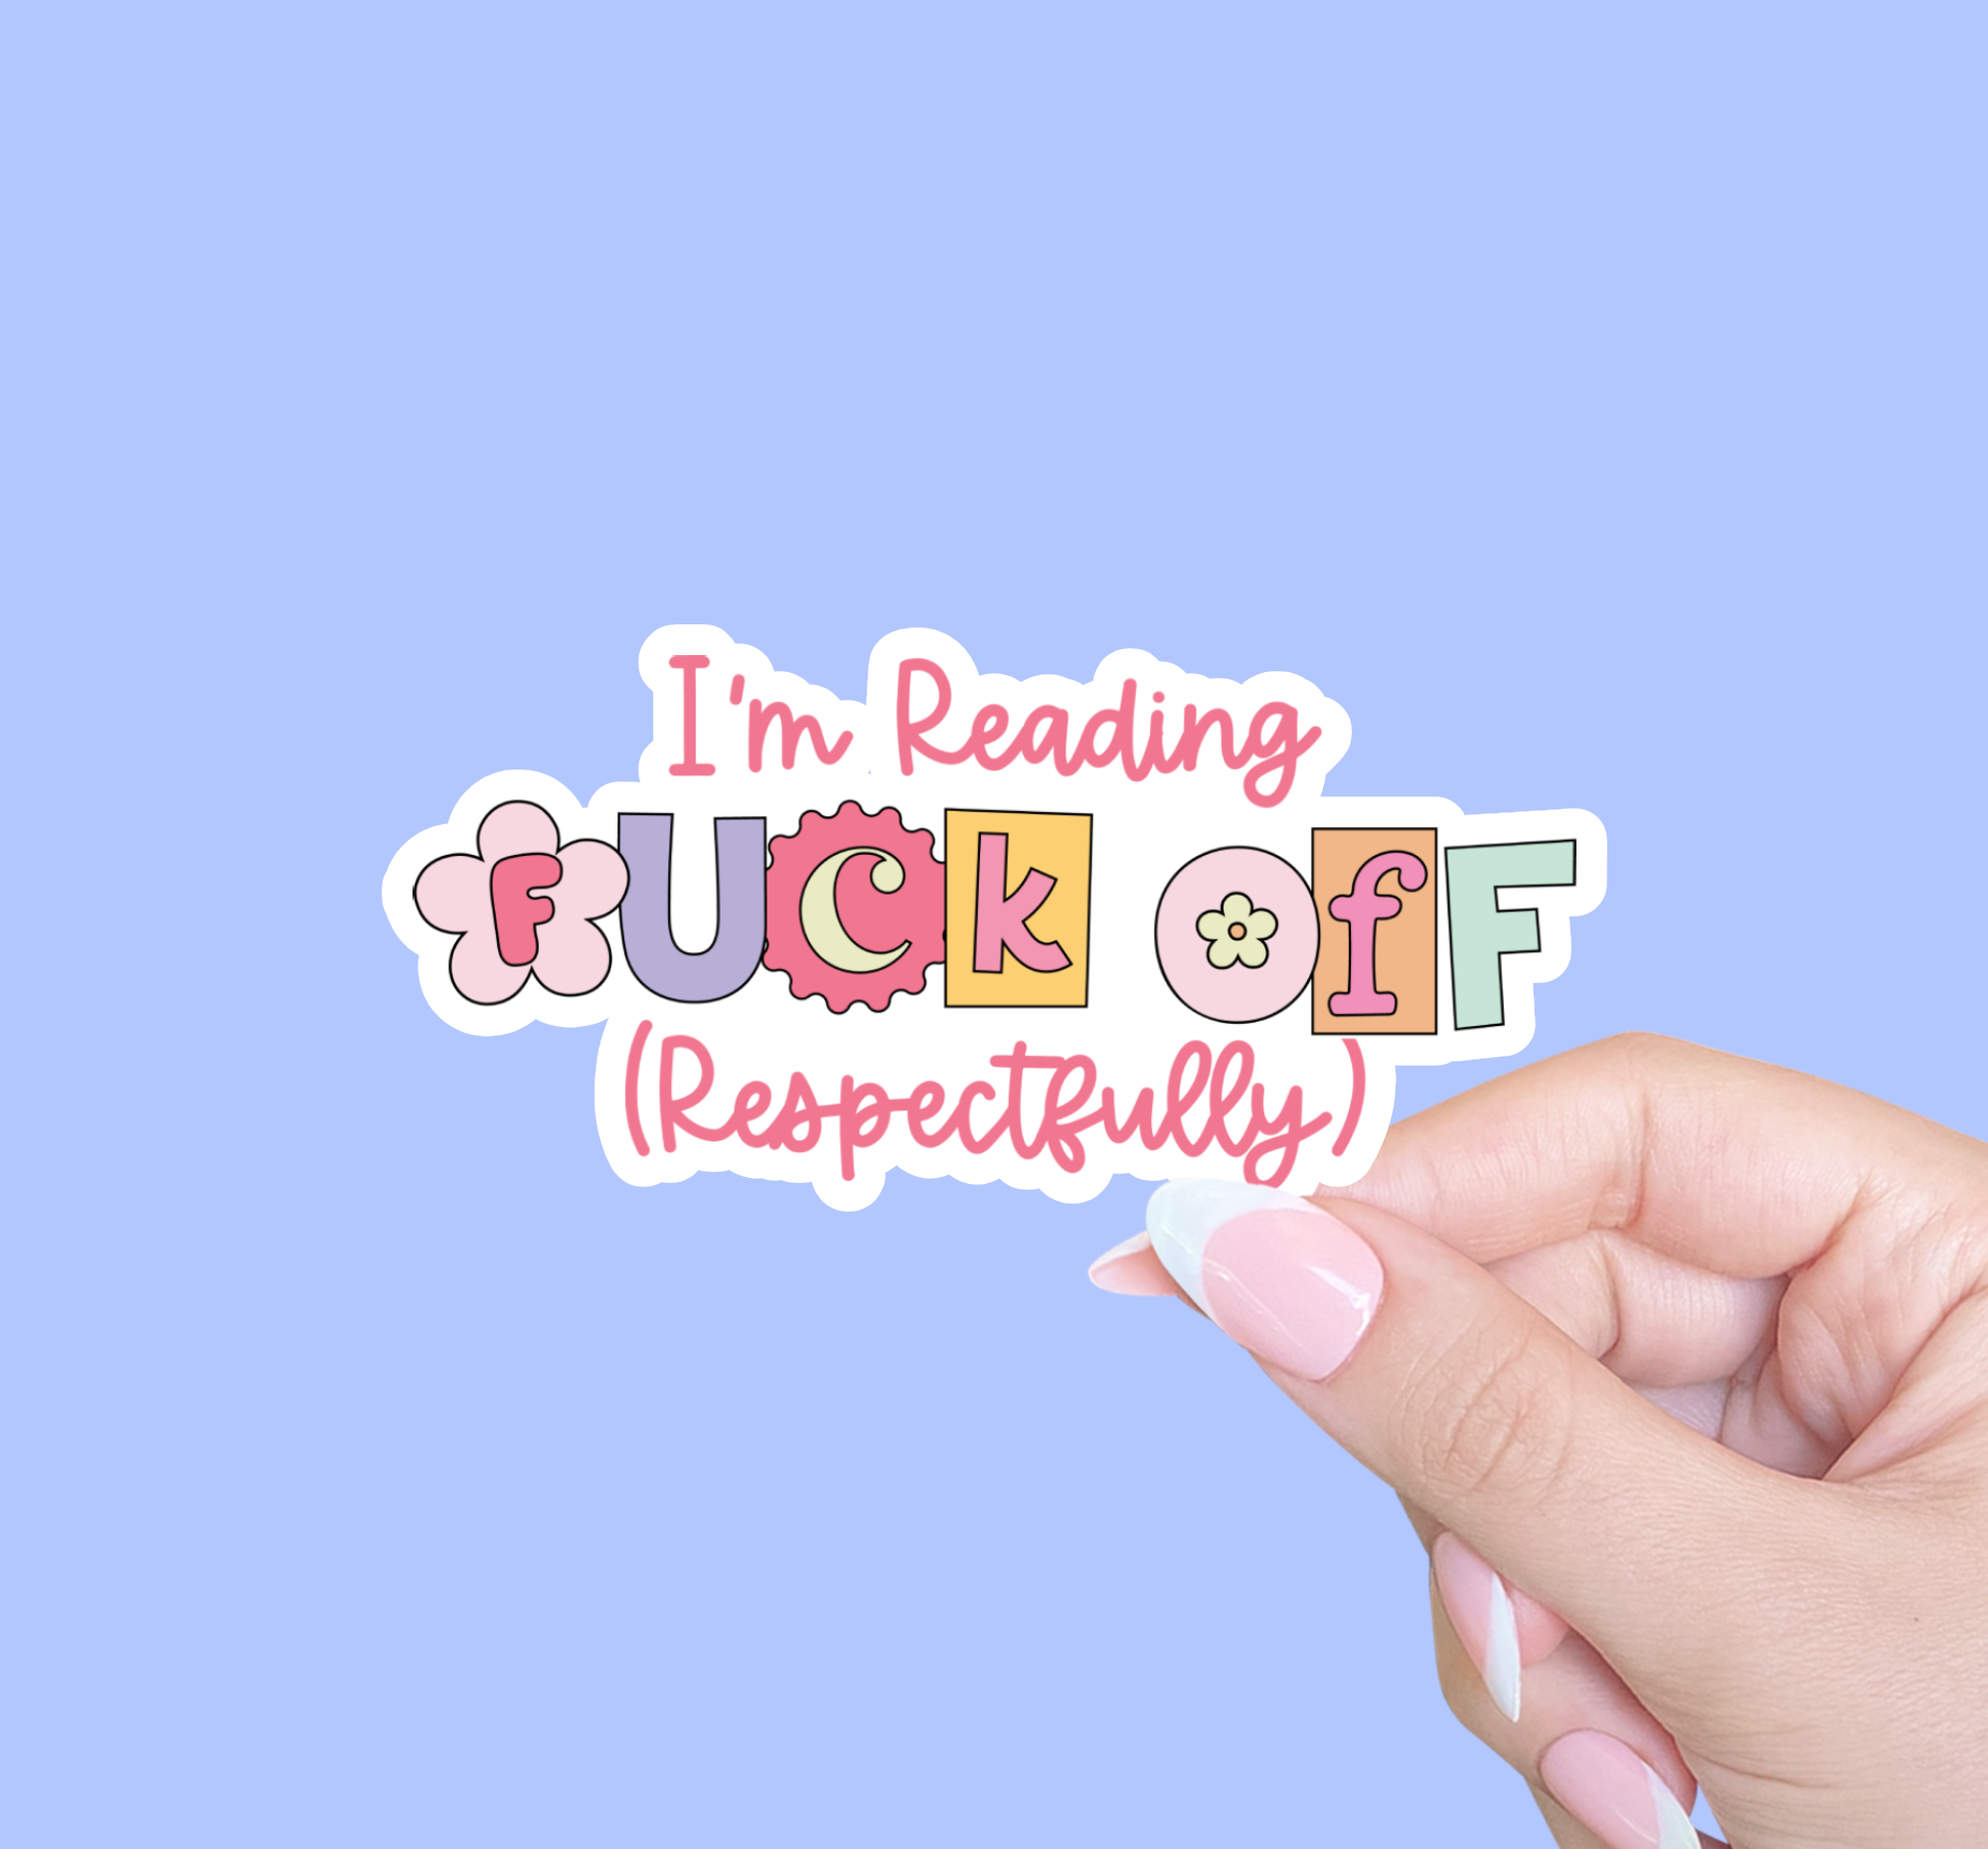 I'm reading fuck off, Kindle sticker